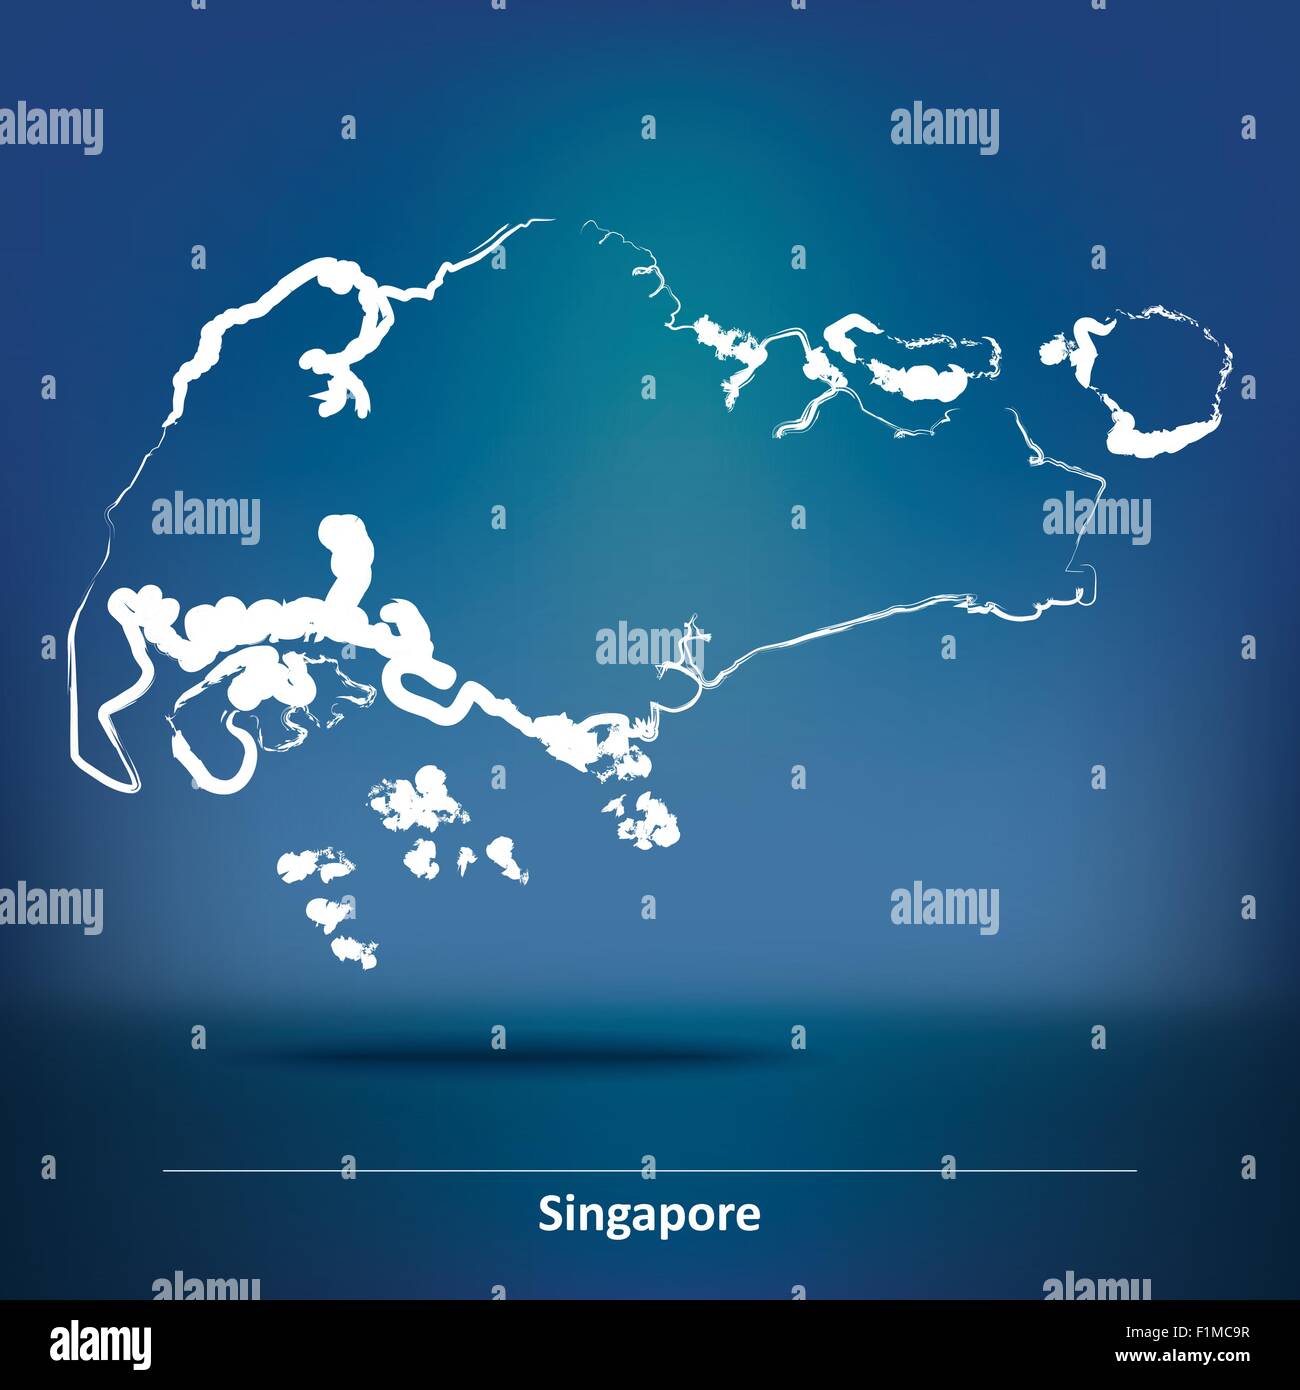 Karte von Singapur - Vektor-Illustration Doodle Stock Vektor